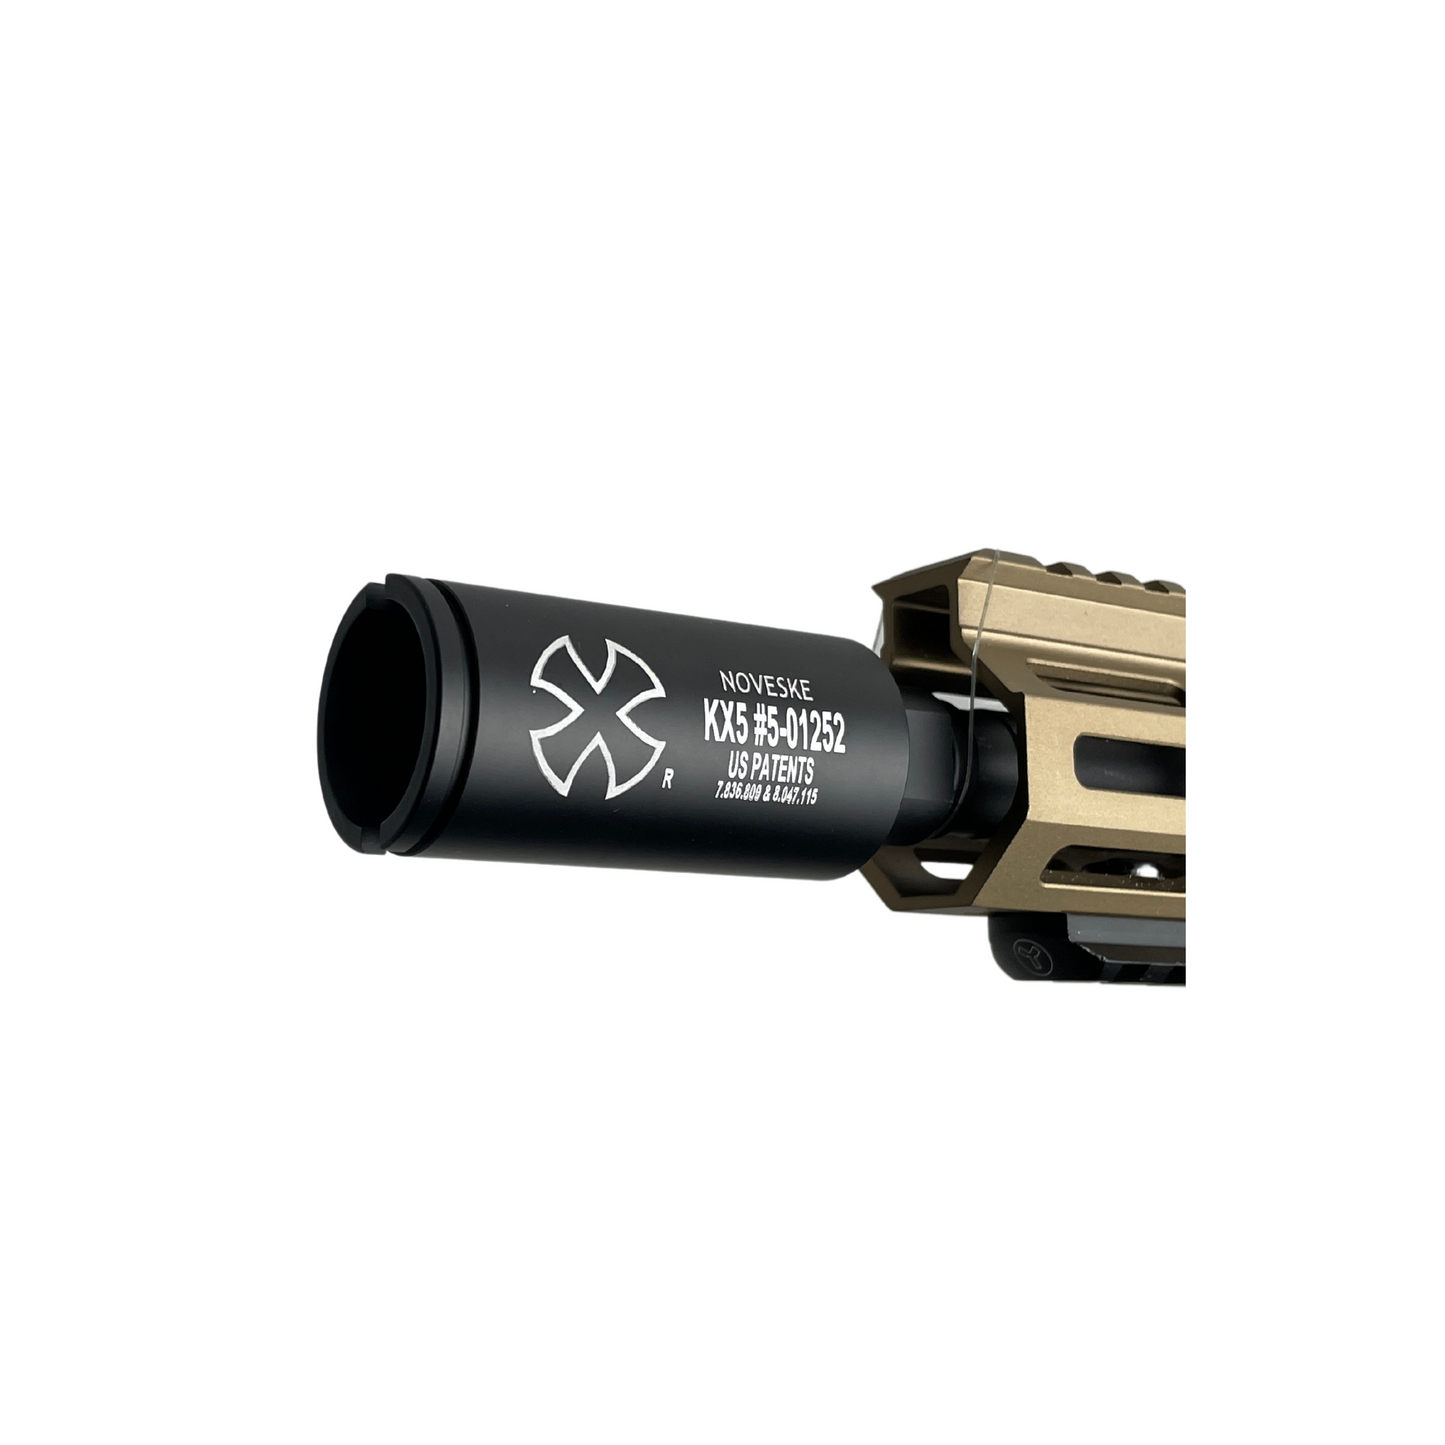 "HOGUE TACTICAL" GBBR MK18 Marksman Gas Blow Back Rifle - Gel Blaster